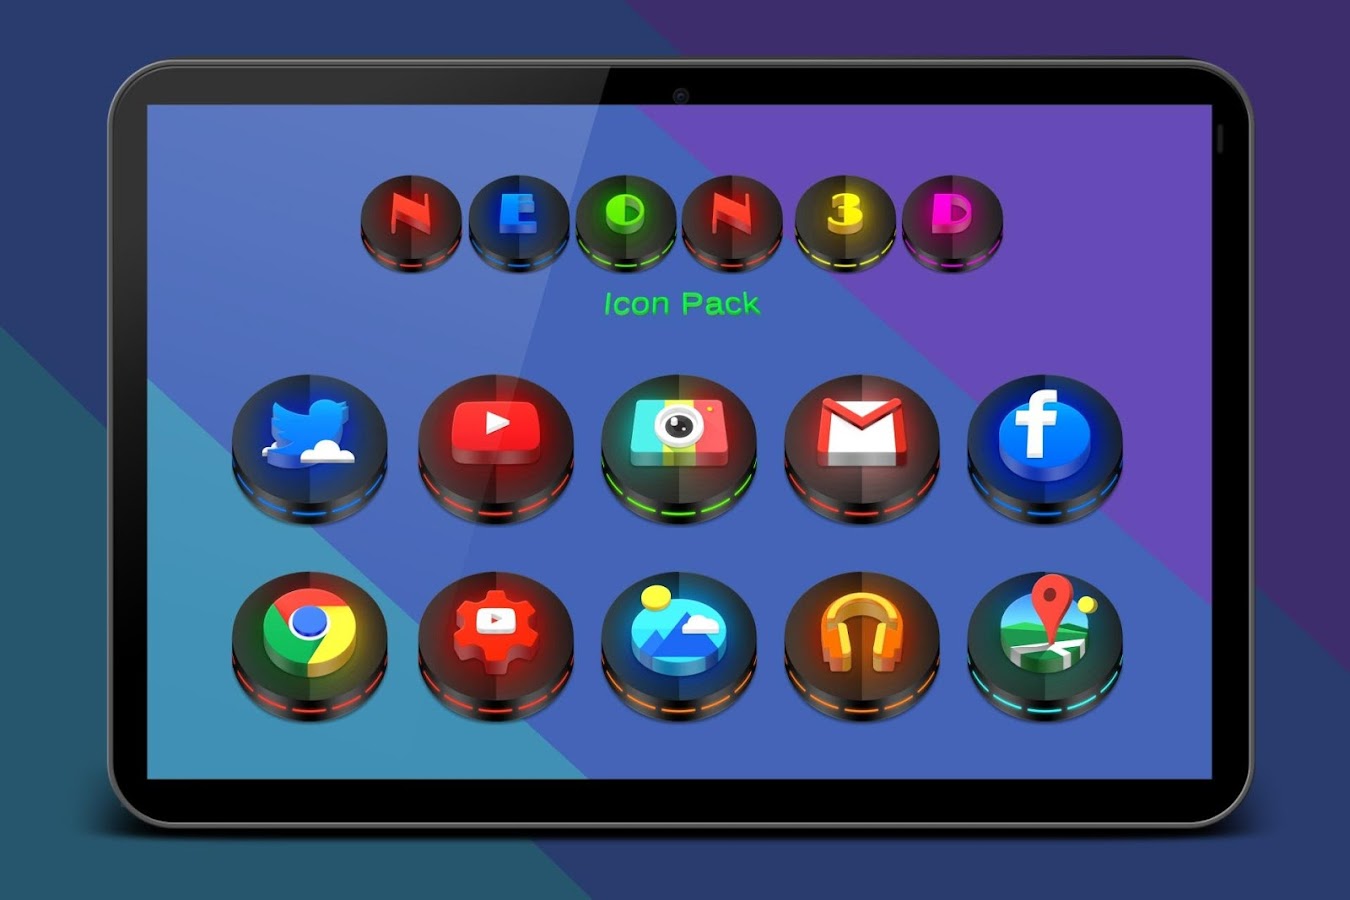    Neon 3D icon Pack- screenshot  